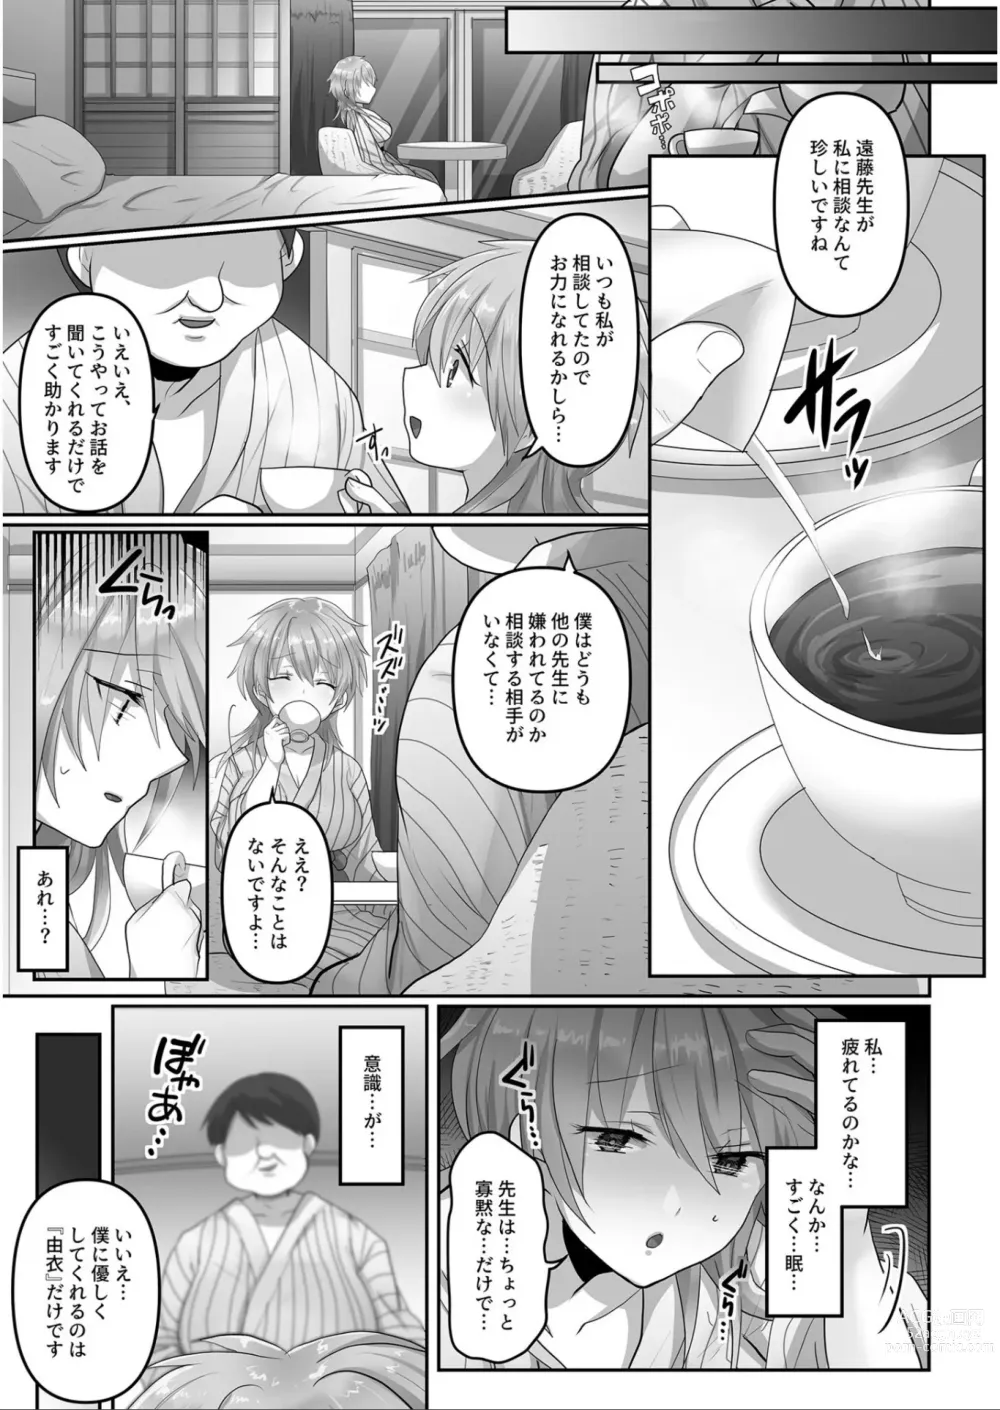 Page 10 of manga Kegasareta Watashi...